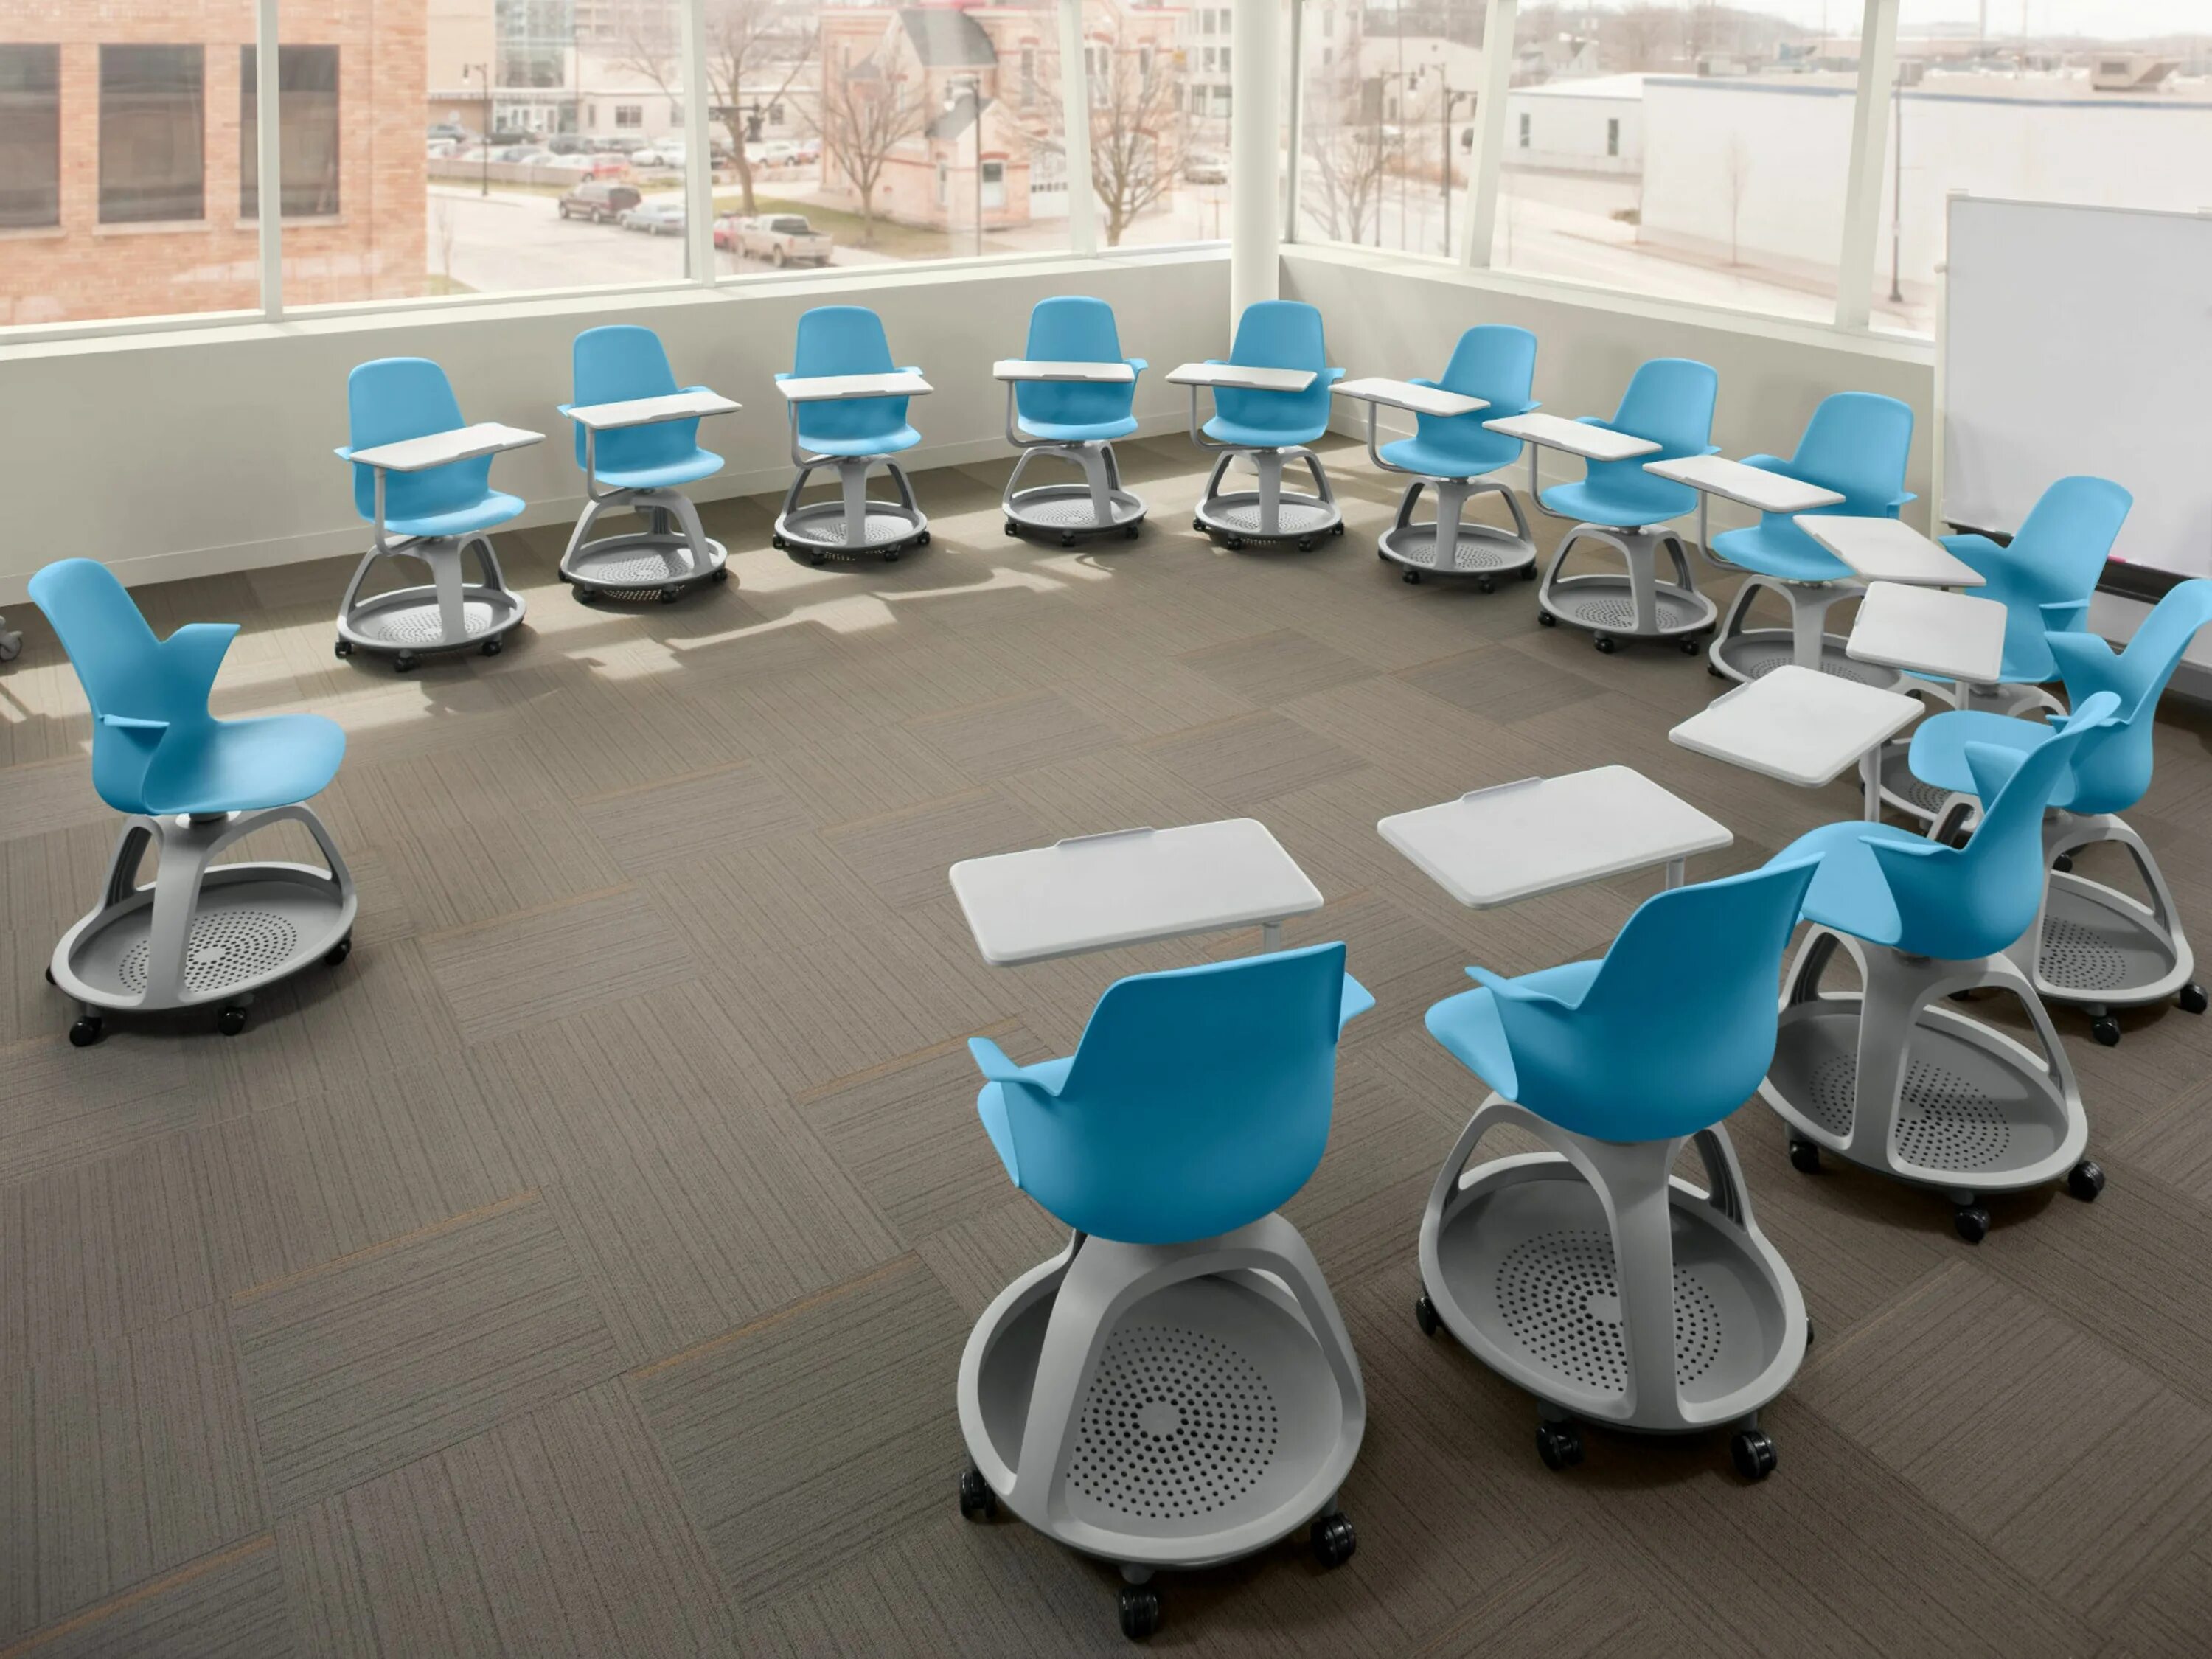 Steelcase node. Node Chair от Steelcase. Класс будущего. Школьный класс будущего. Учебный класс будущего